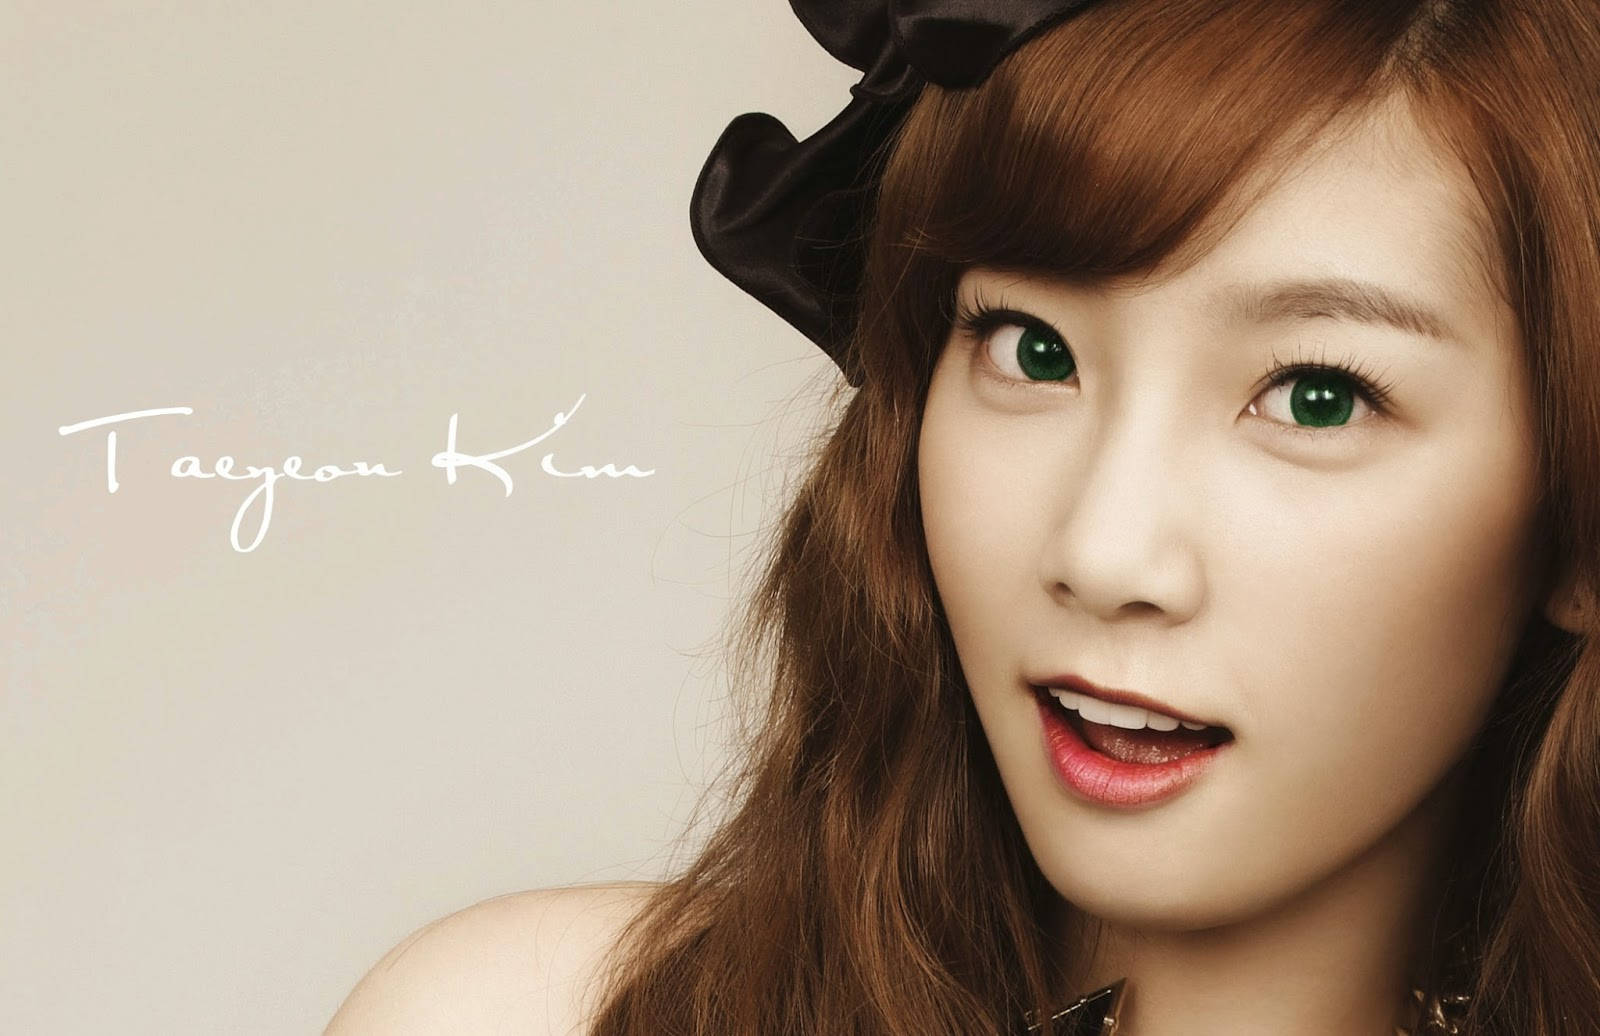 Kpop Idol Kim Taeyeon Would Be Translated To: K-pop-idol Kim Taeyeon Wallpaper